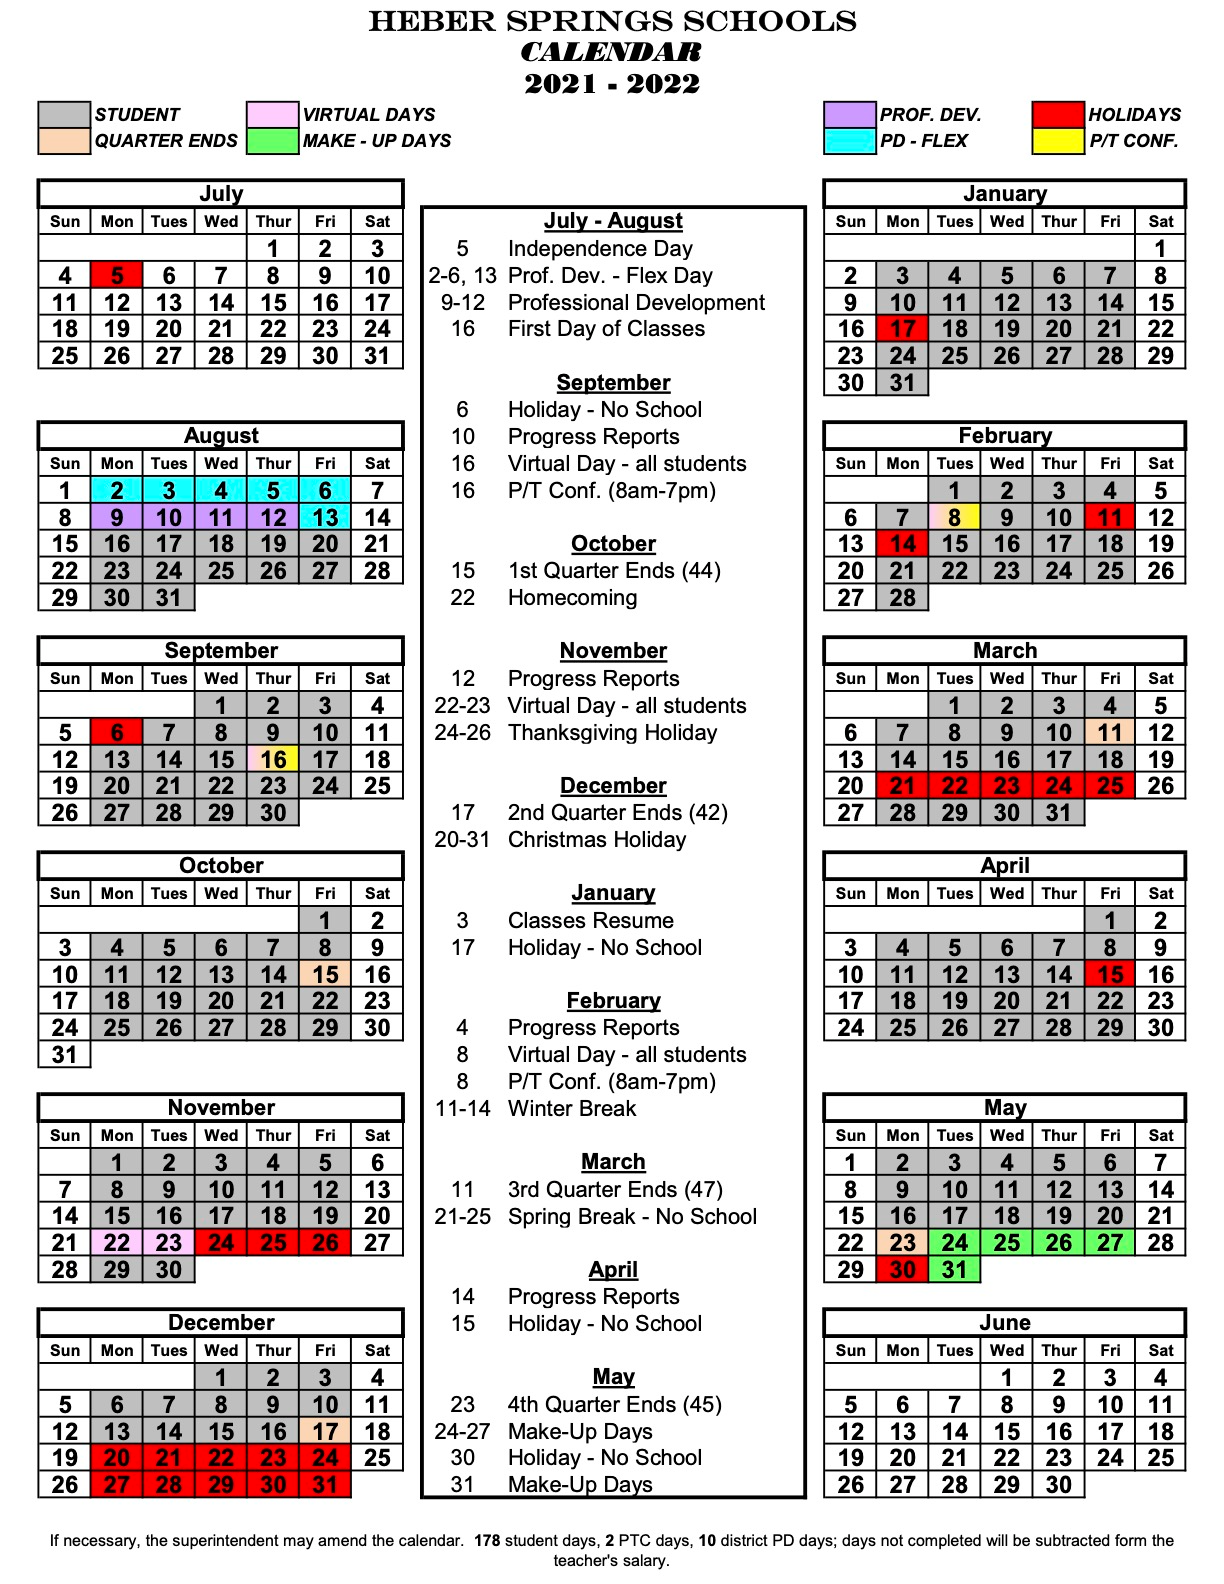 School Calendar Heber Springs Schools